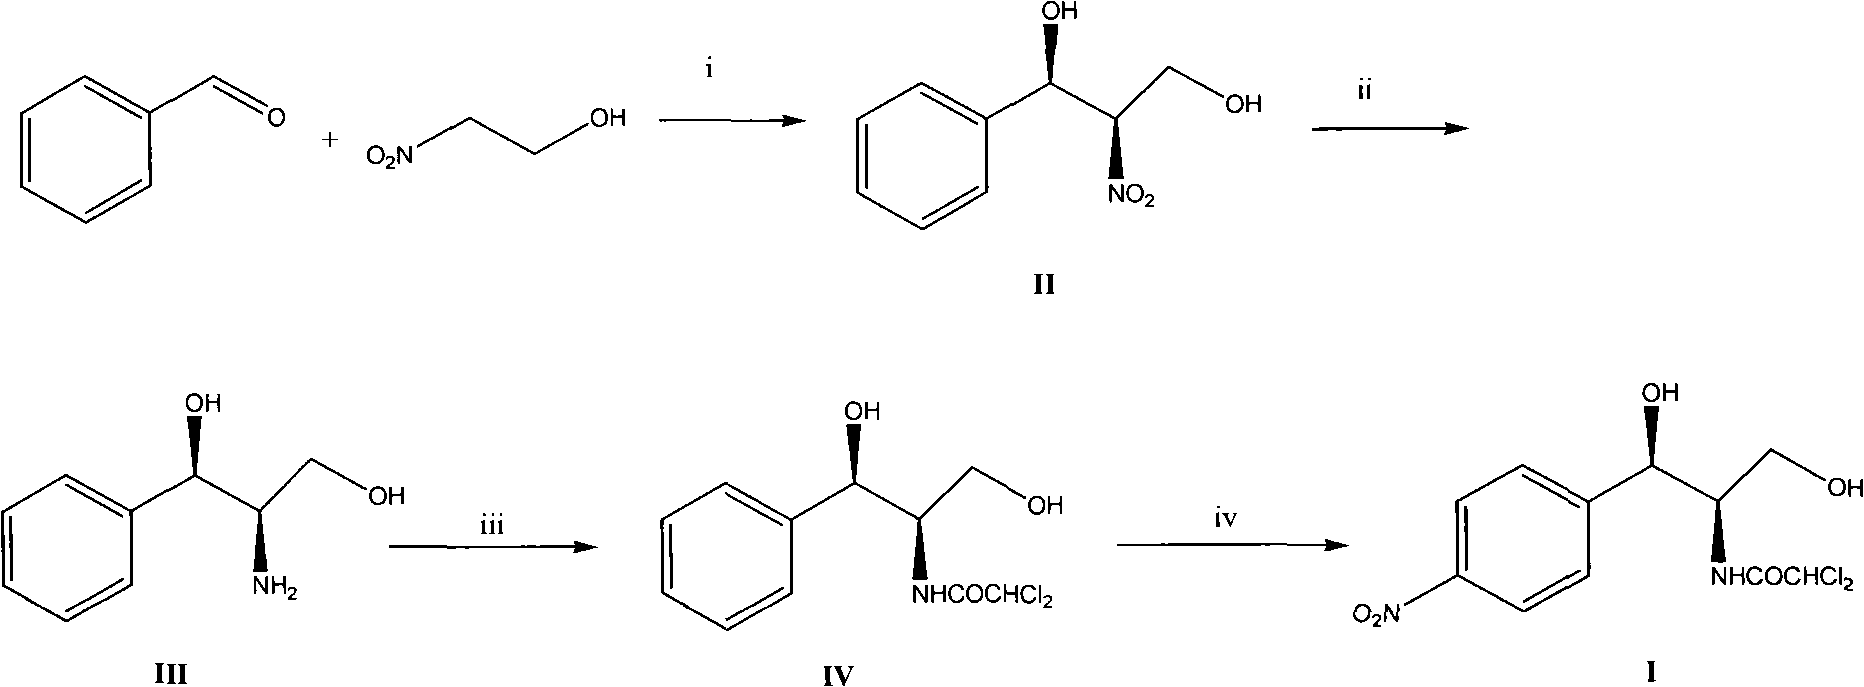 A kind of synthetic method of broad-spectrum antibiotic chloramphenicol